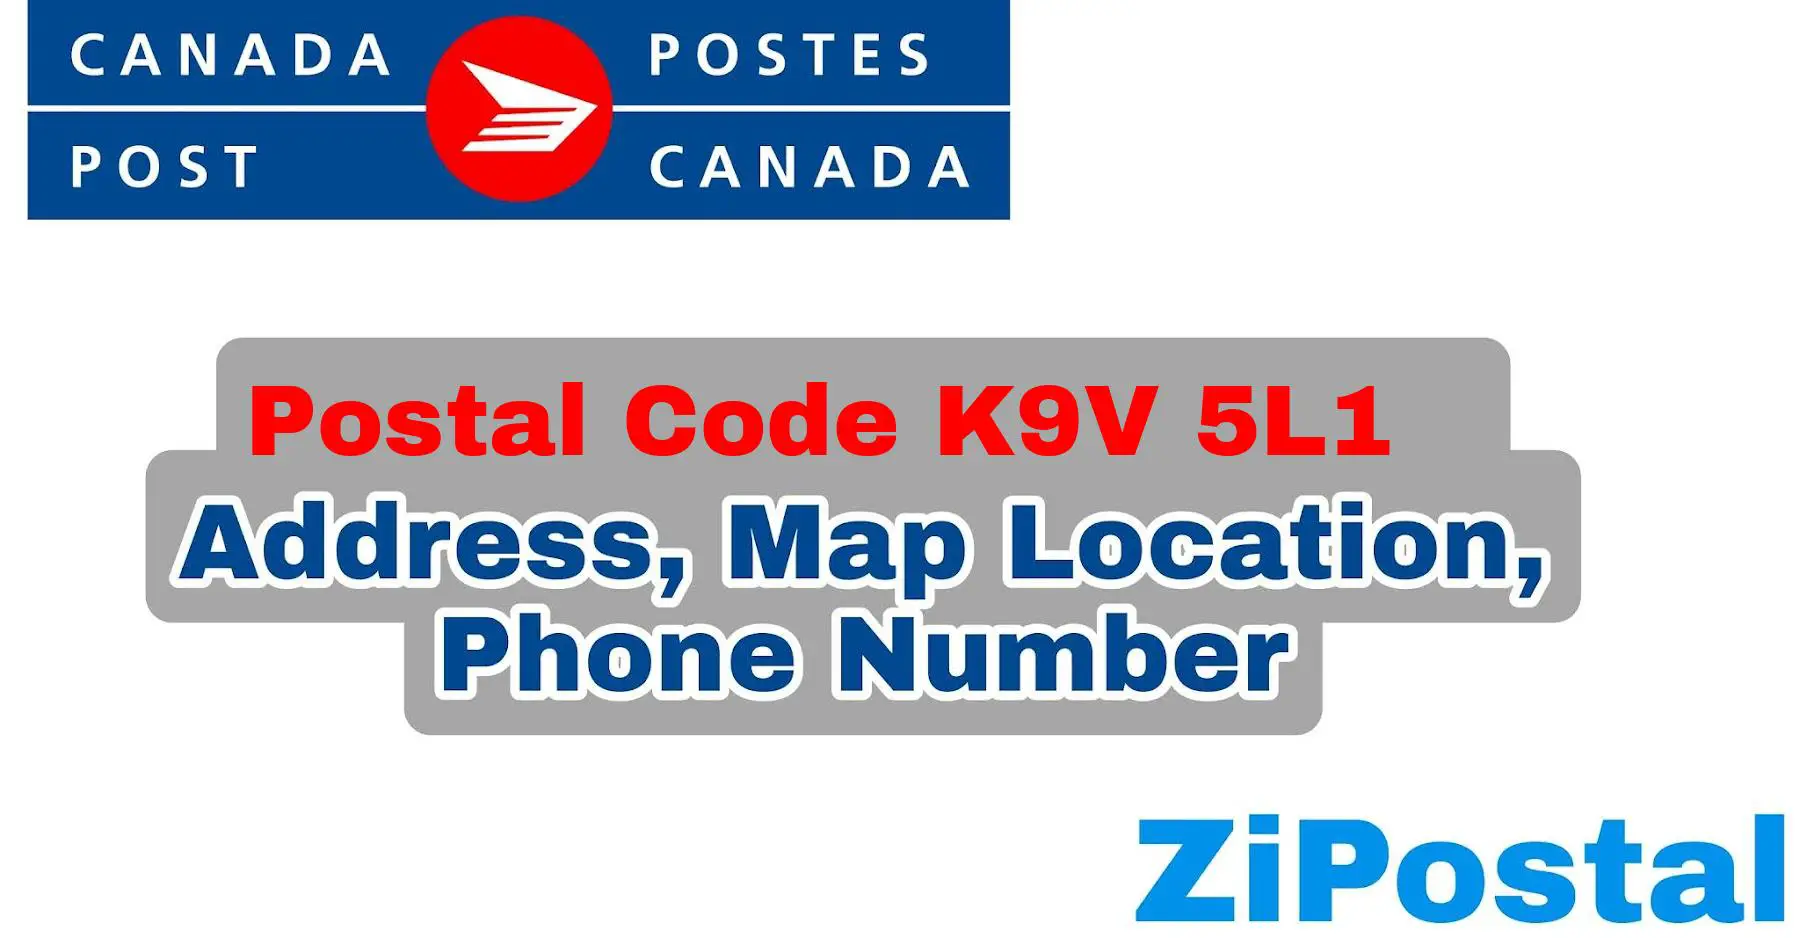 Postal Code K9V 5L1 Address Map Location and Phone Number